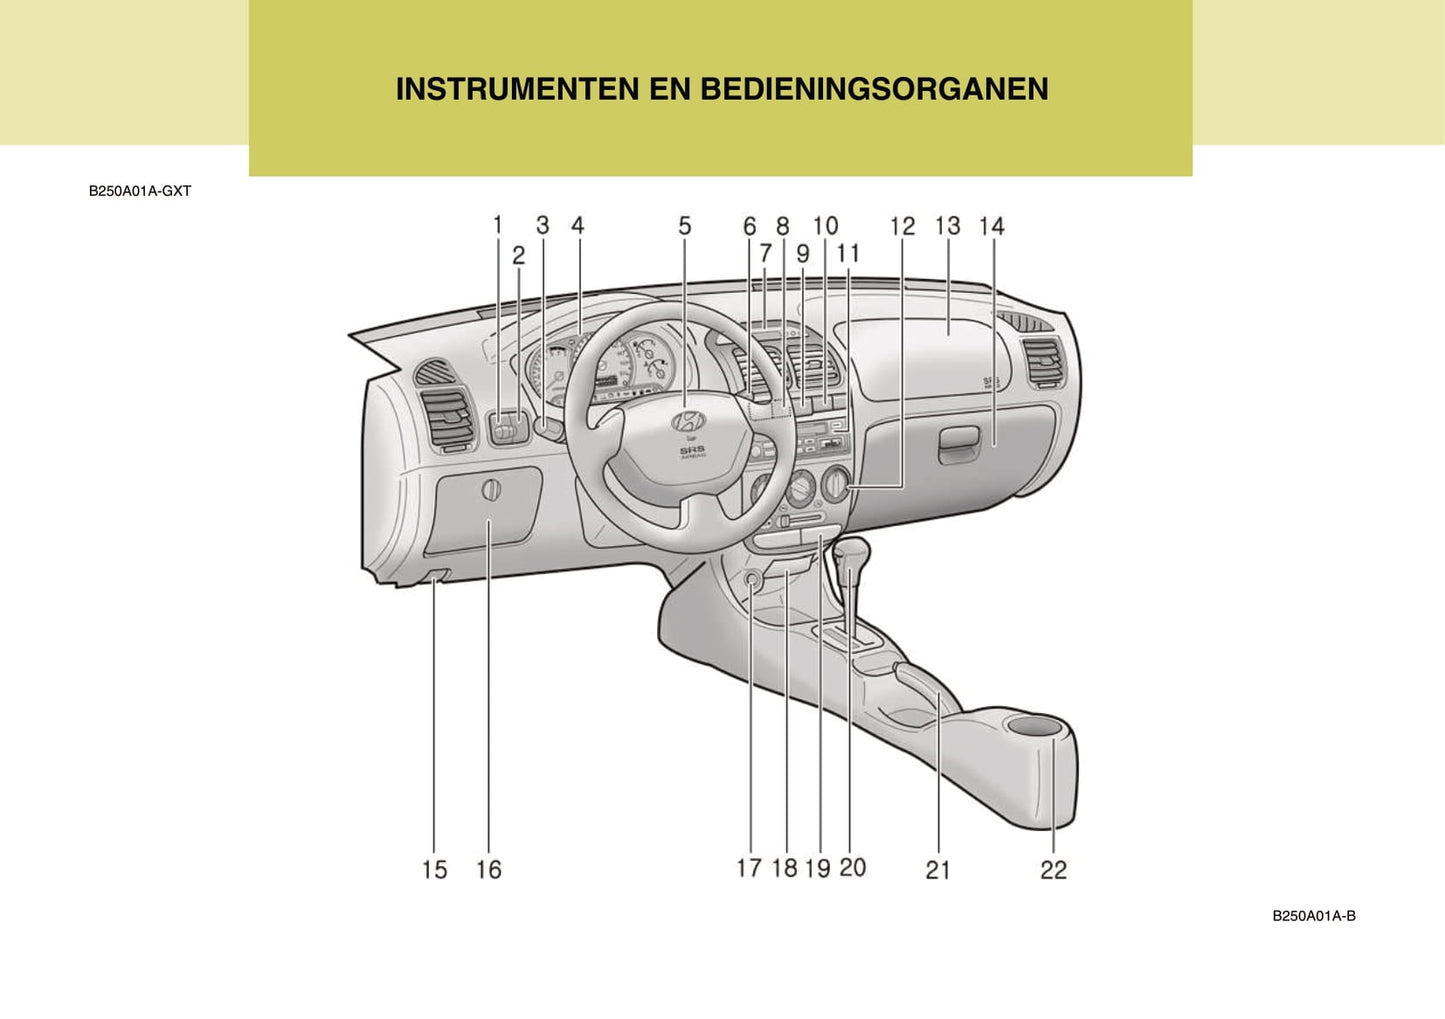 2004-2005 Hyundai Accent Owner's Manual | Dutch